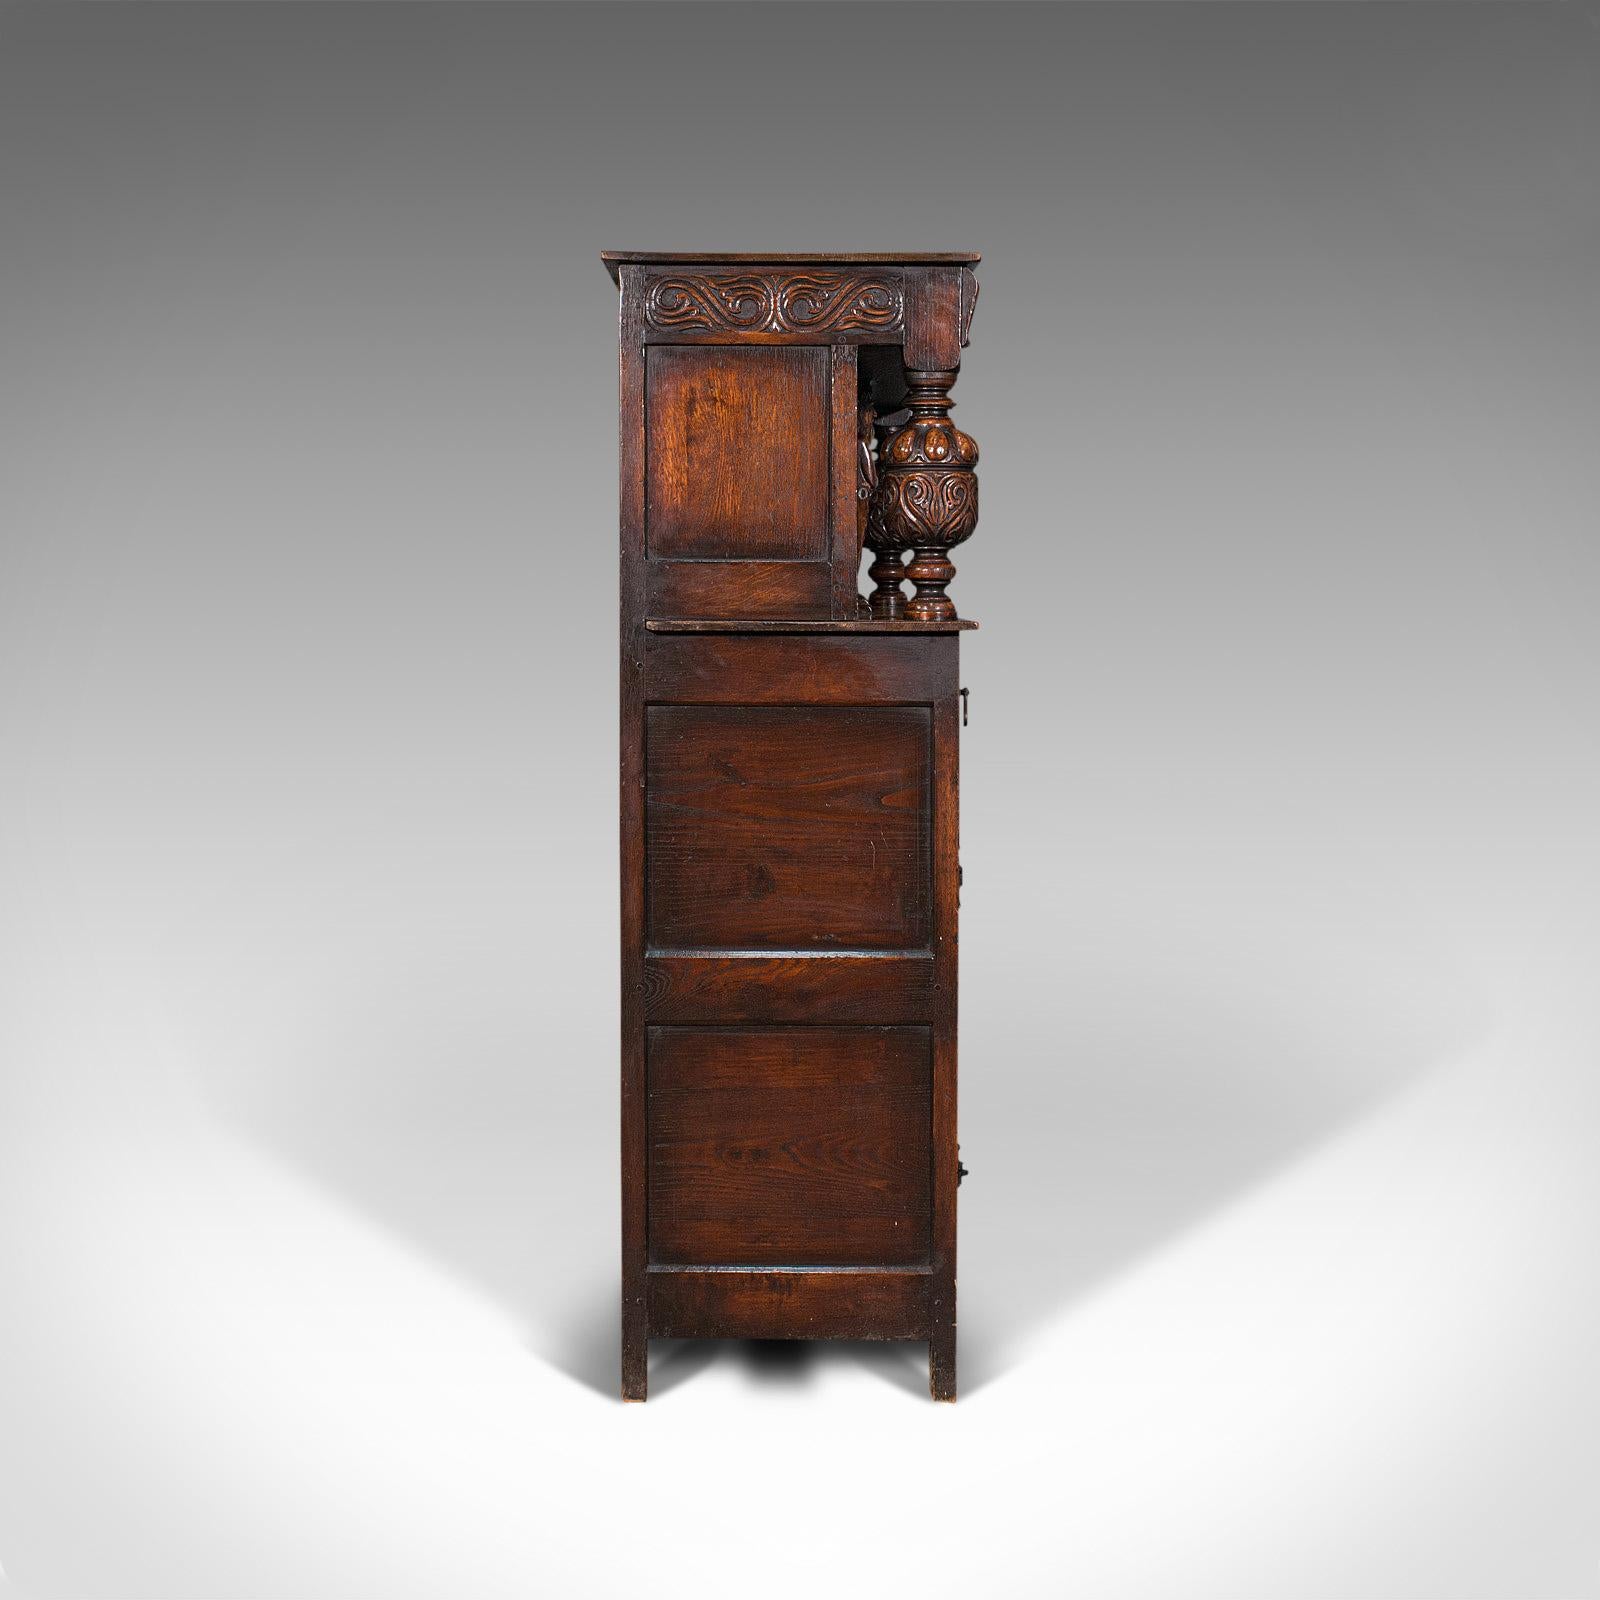 19th Century Antique Court Cabinet, English, Oak, Sideboard, Credenza, Jacobean Revival, 1890